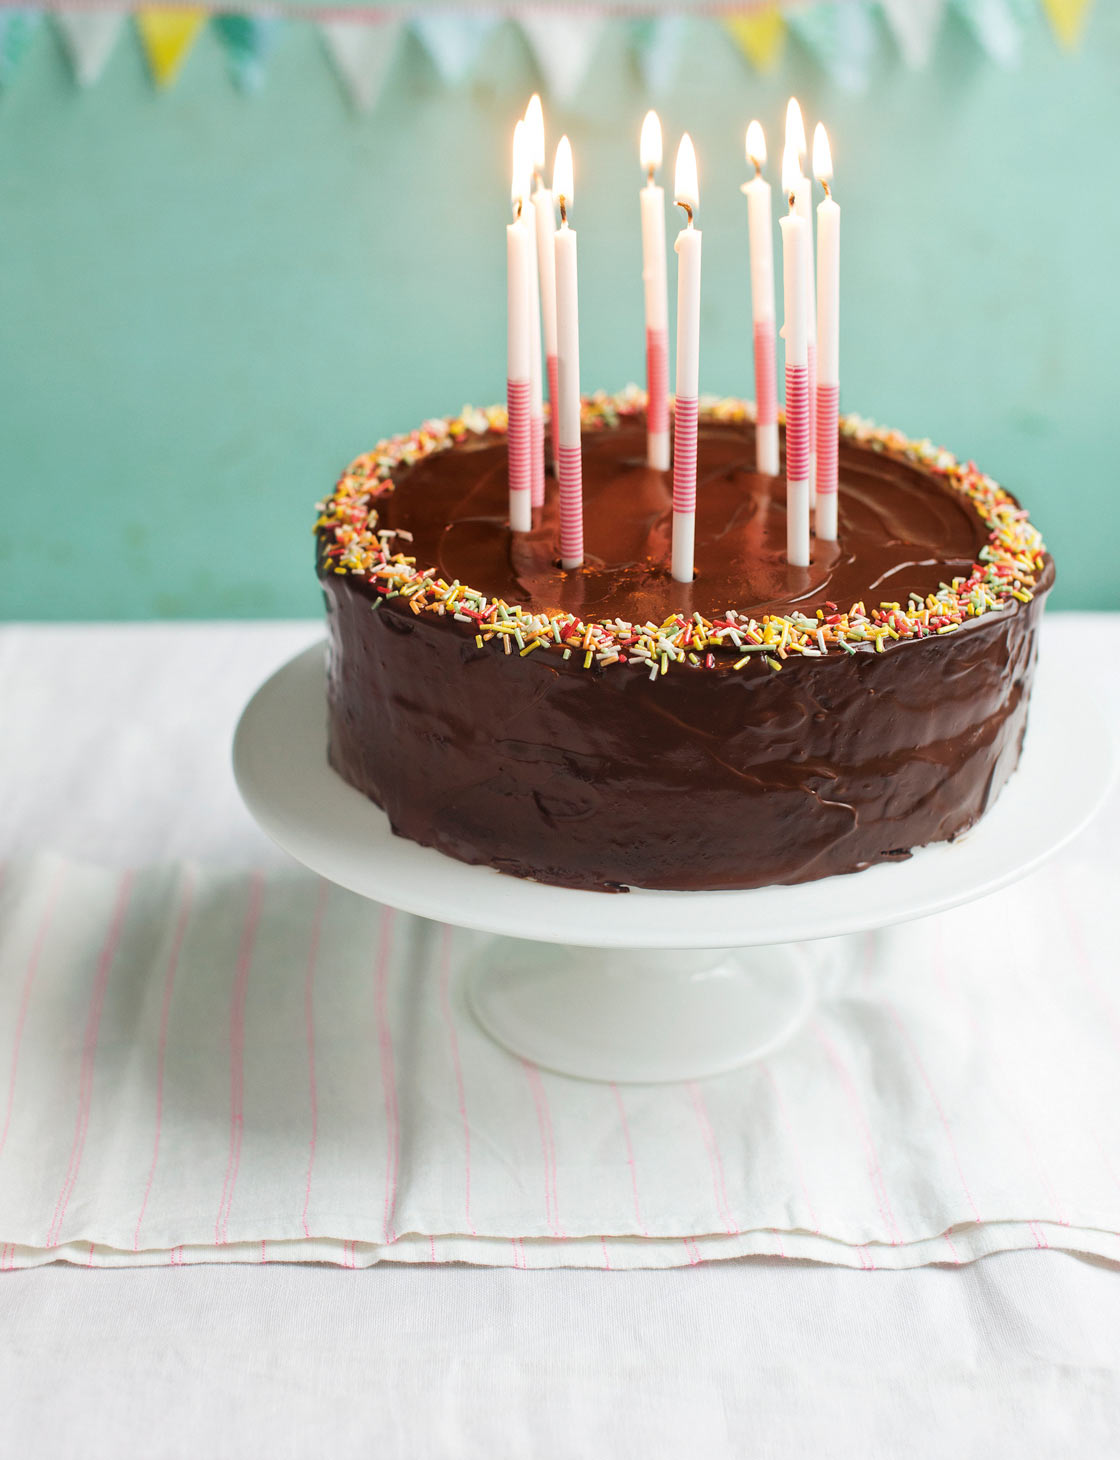 Gluten Free Funfetti Cake – The Ultimate Birthday Cake